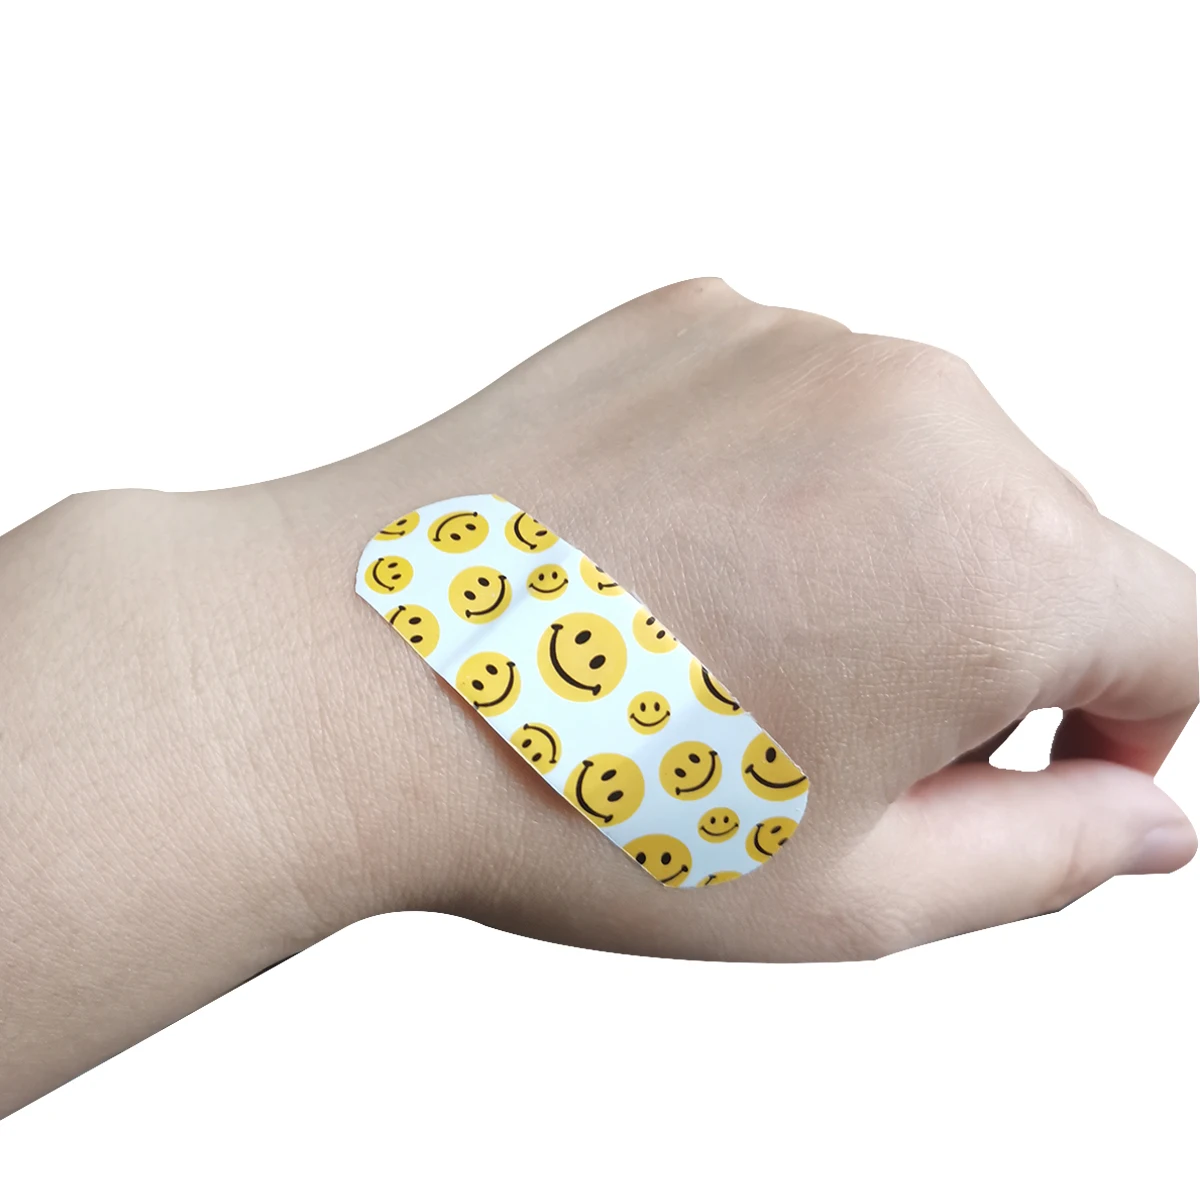 CE Manufactur-High Quality custom printed bandaid for kids/cartoon printed band-aid